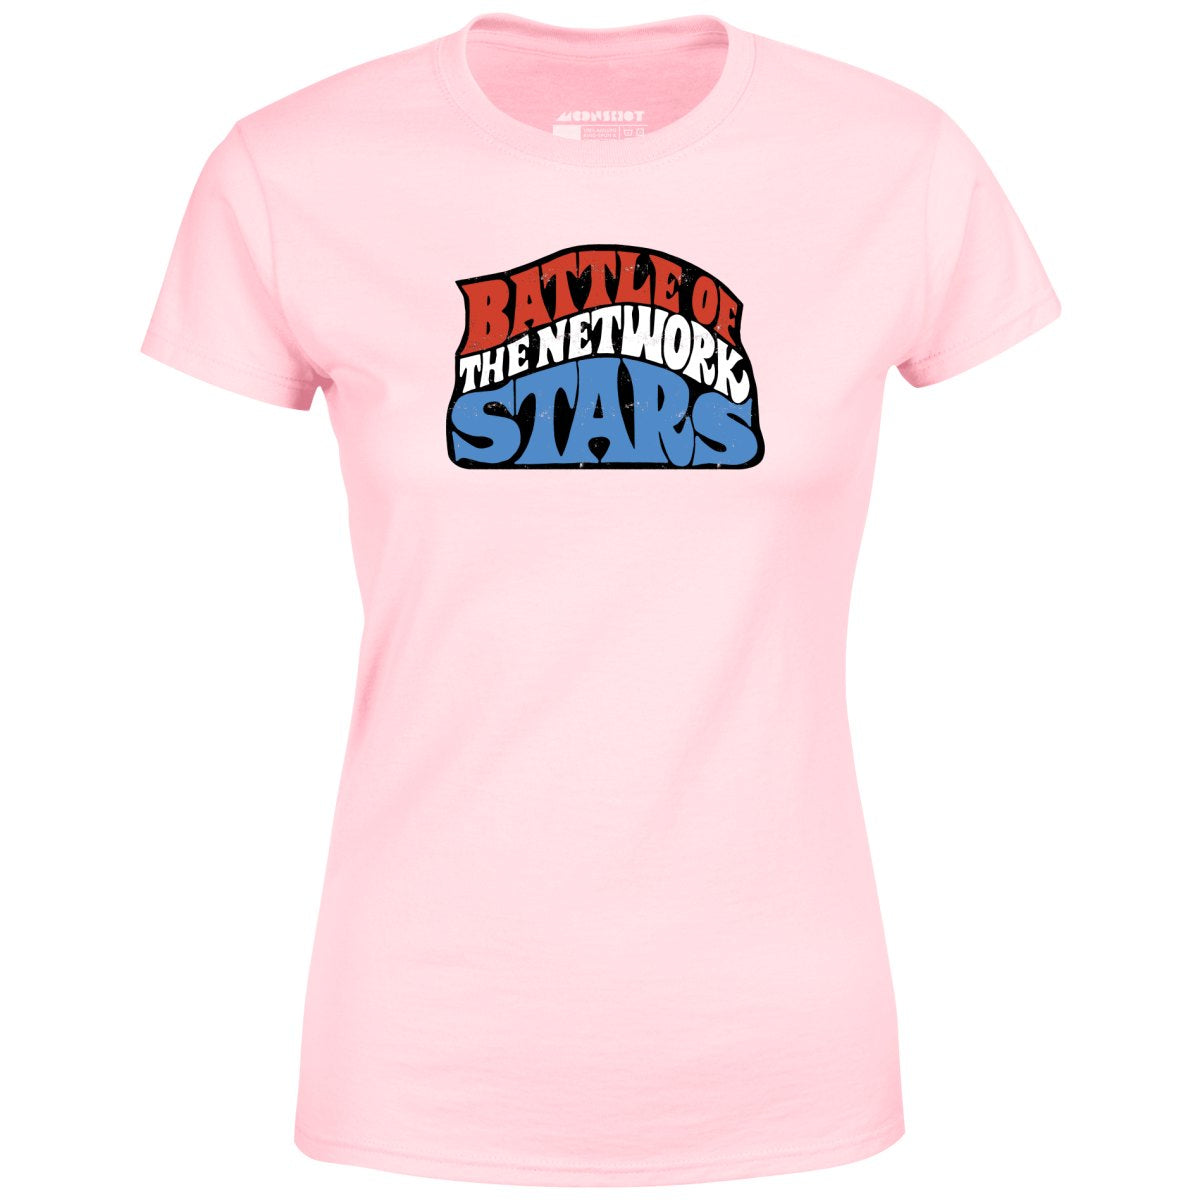 Battle of the Network Stars - Women's T-Shirt